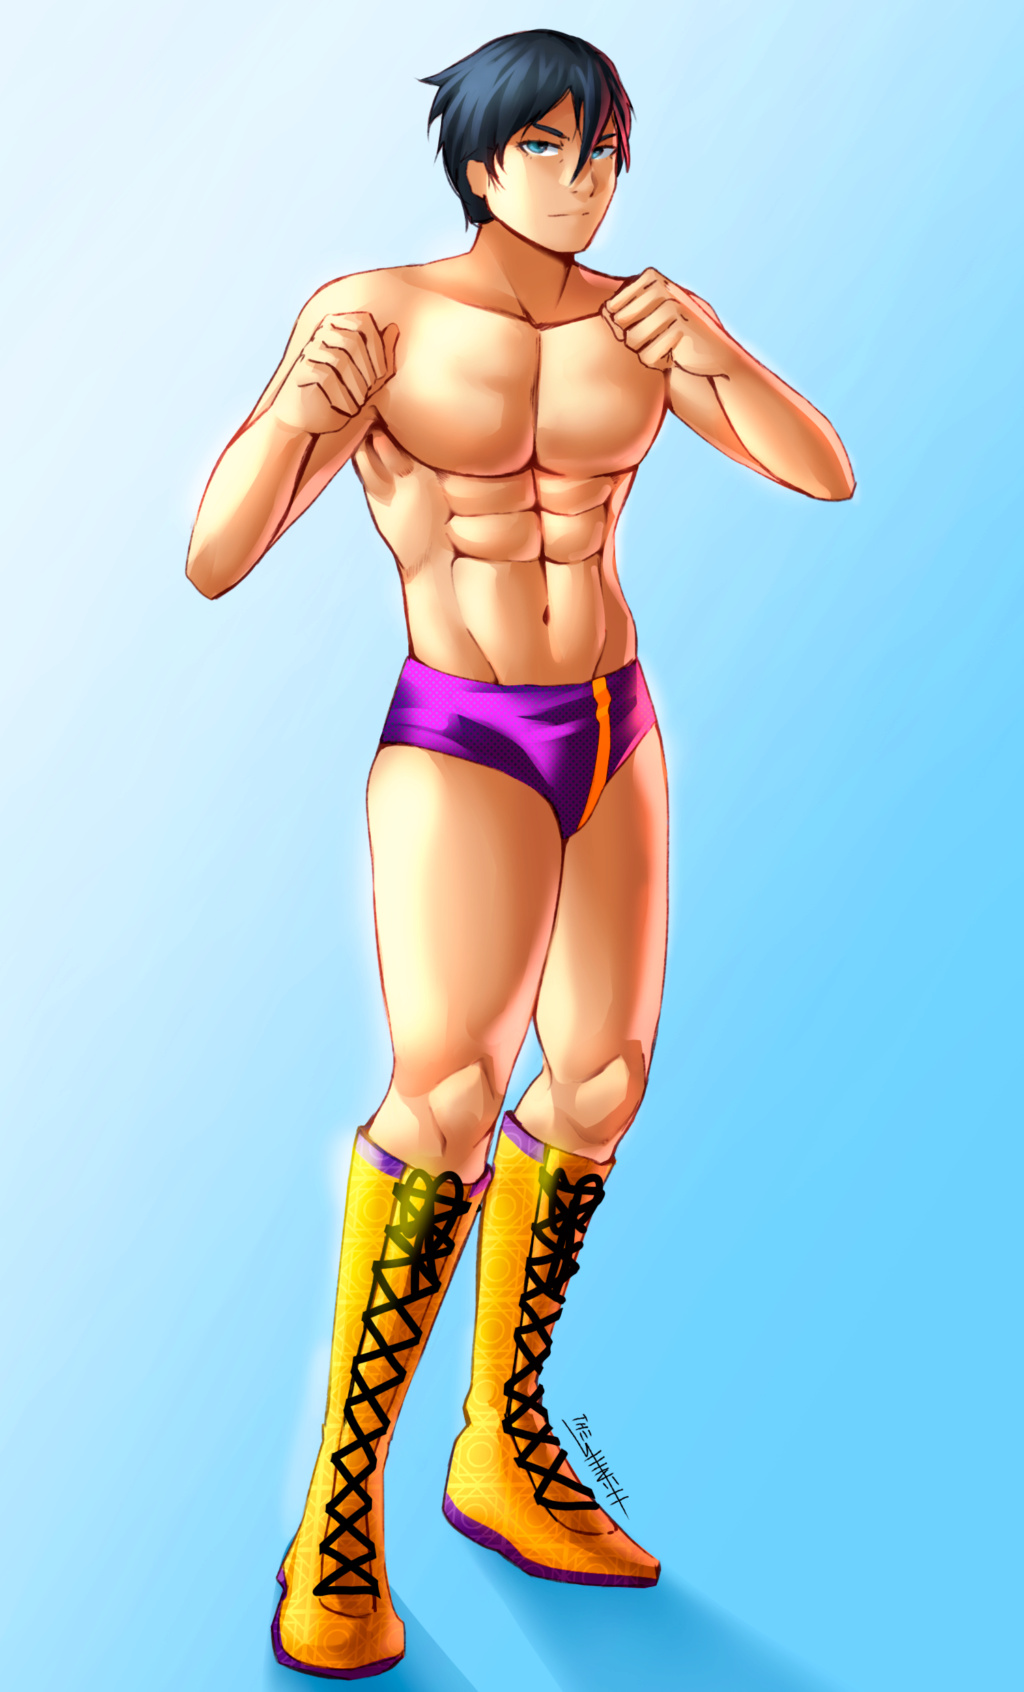 Daisuke 'The Wrestling Prince' Takeuchi. Teenwr10